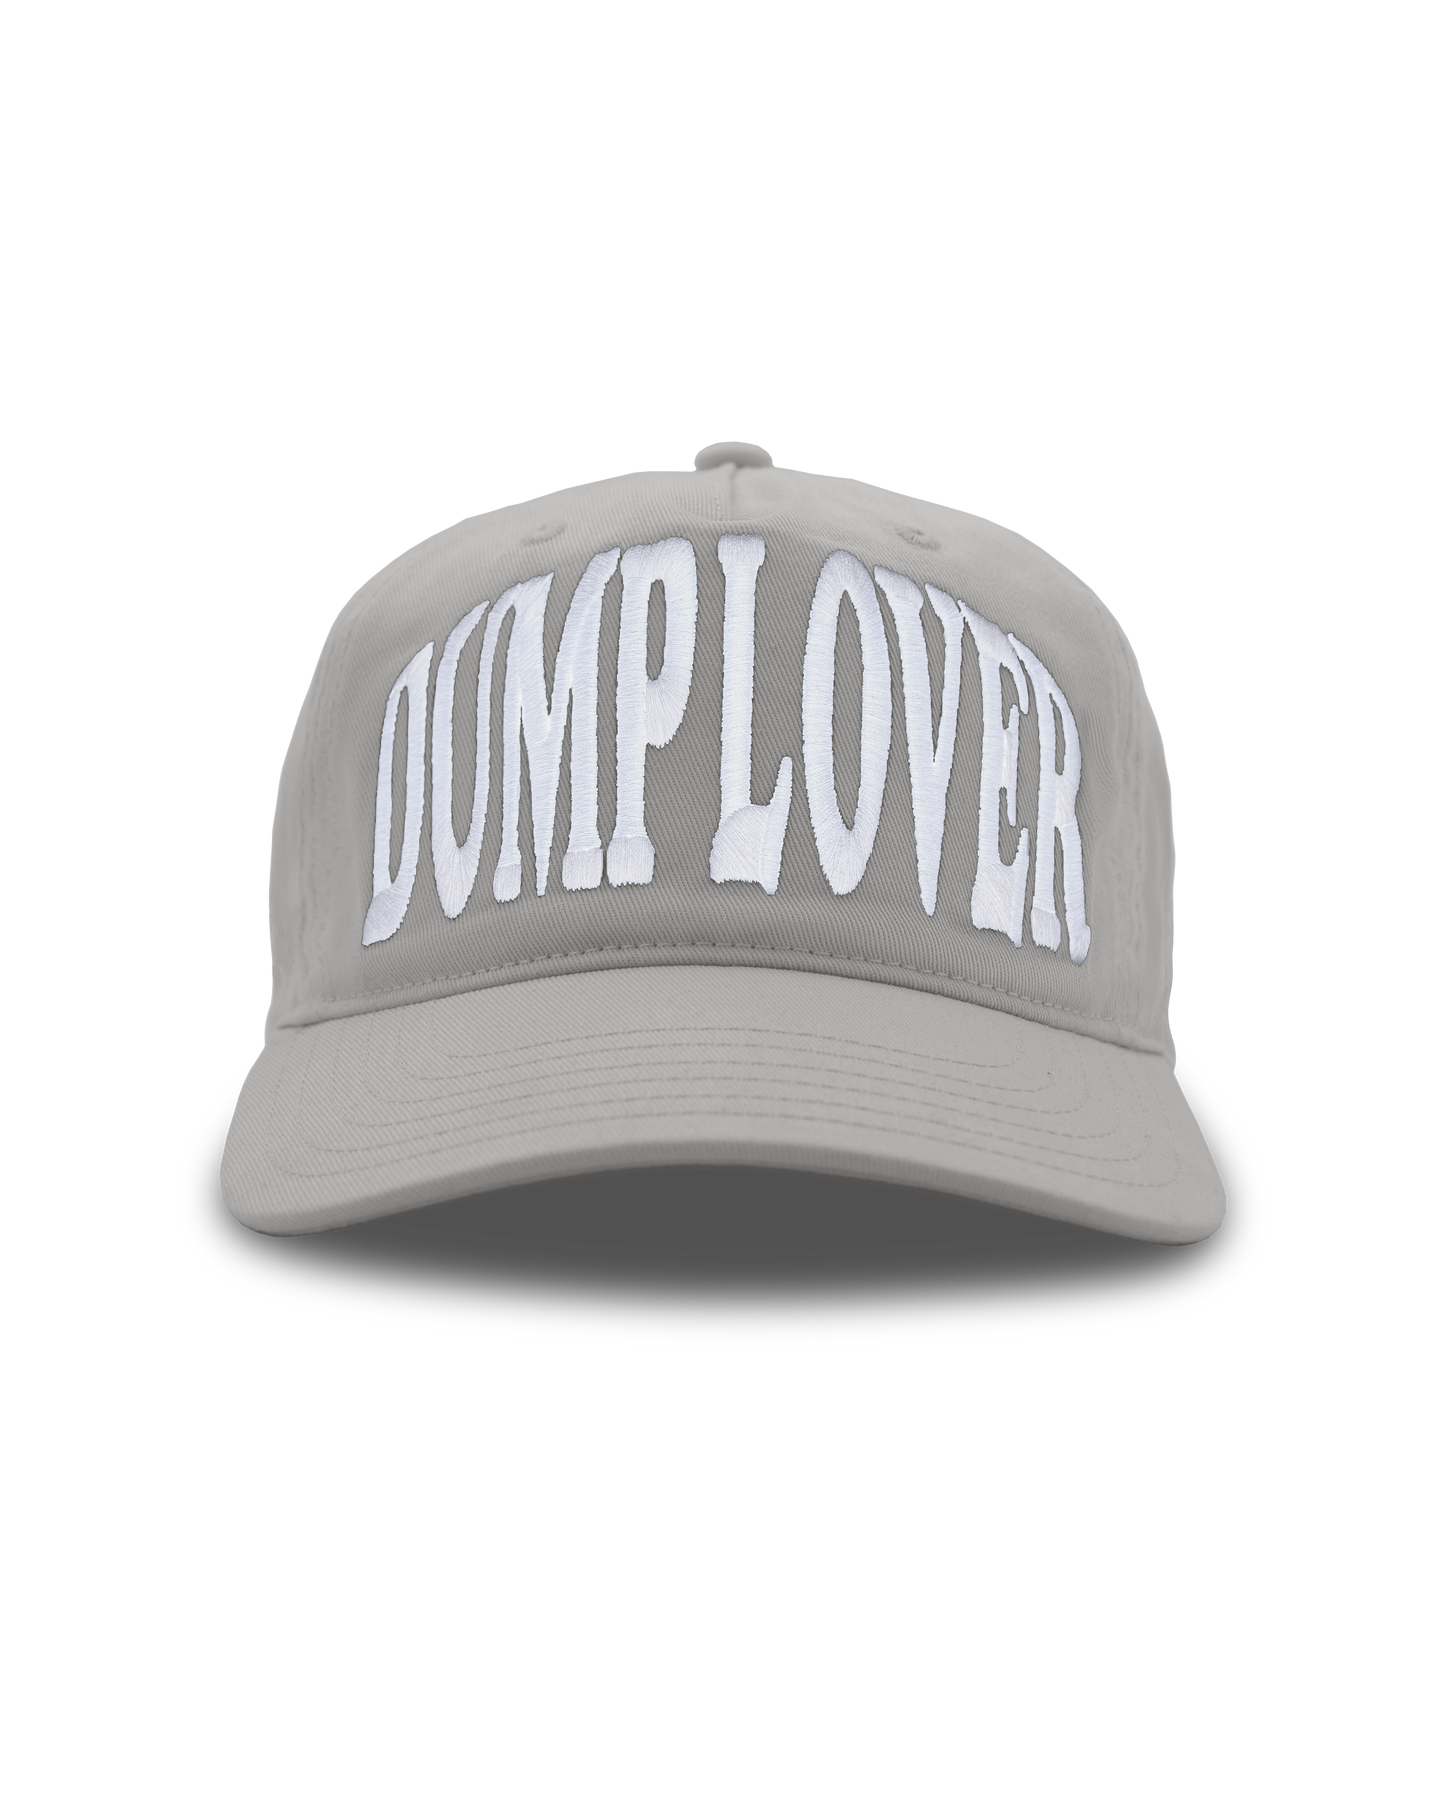 545 DUMP LOVER 6-PANEL HAT GREY